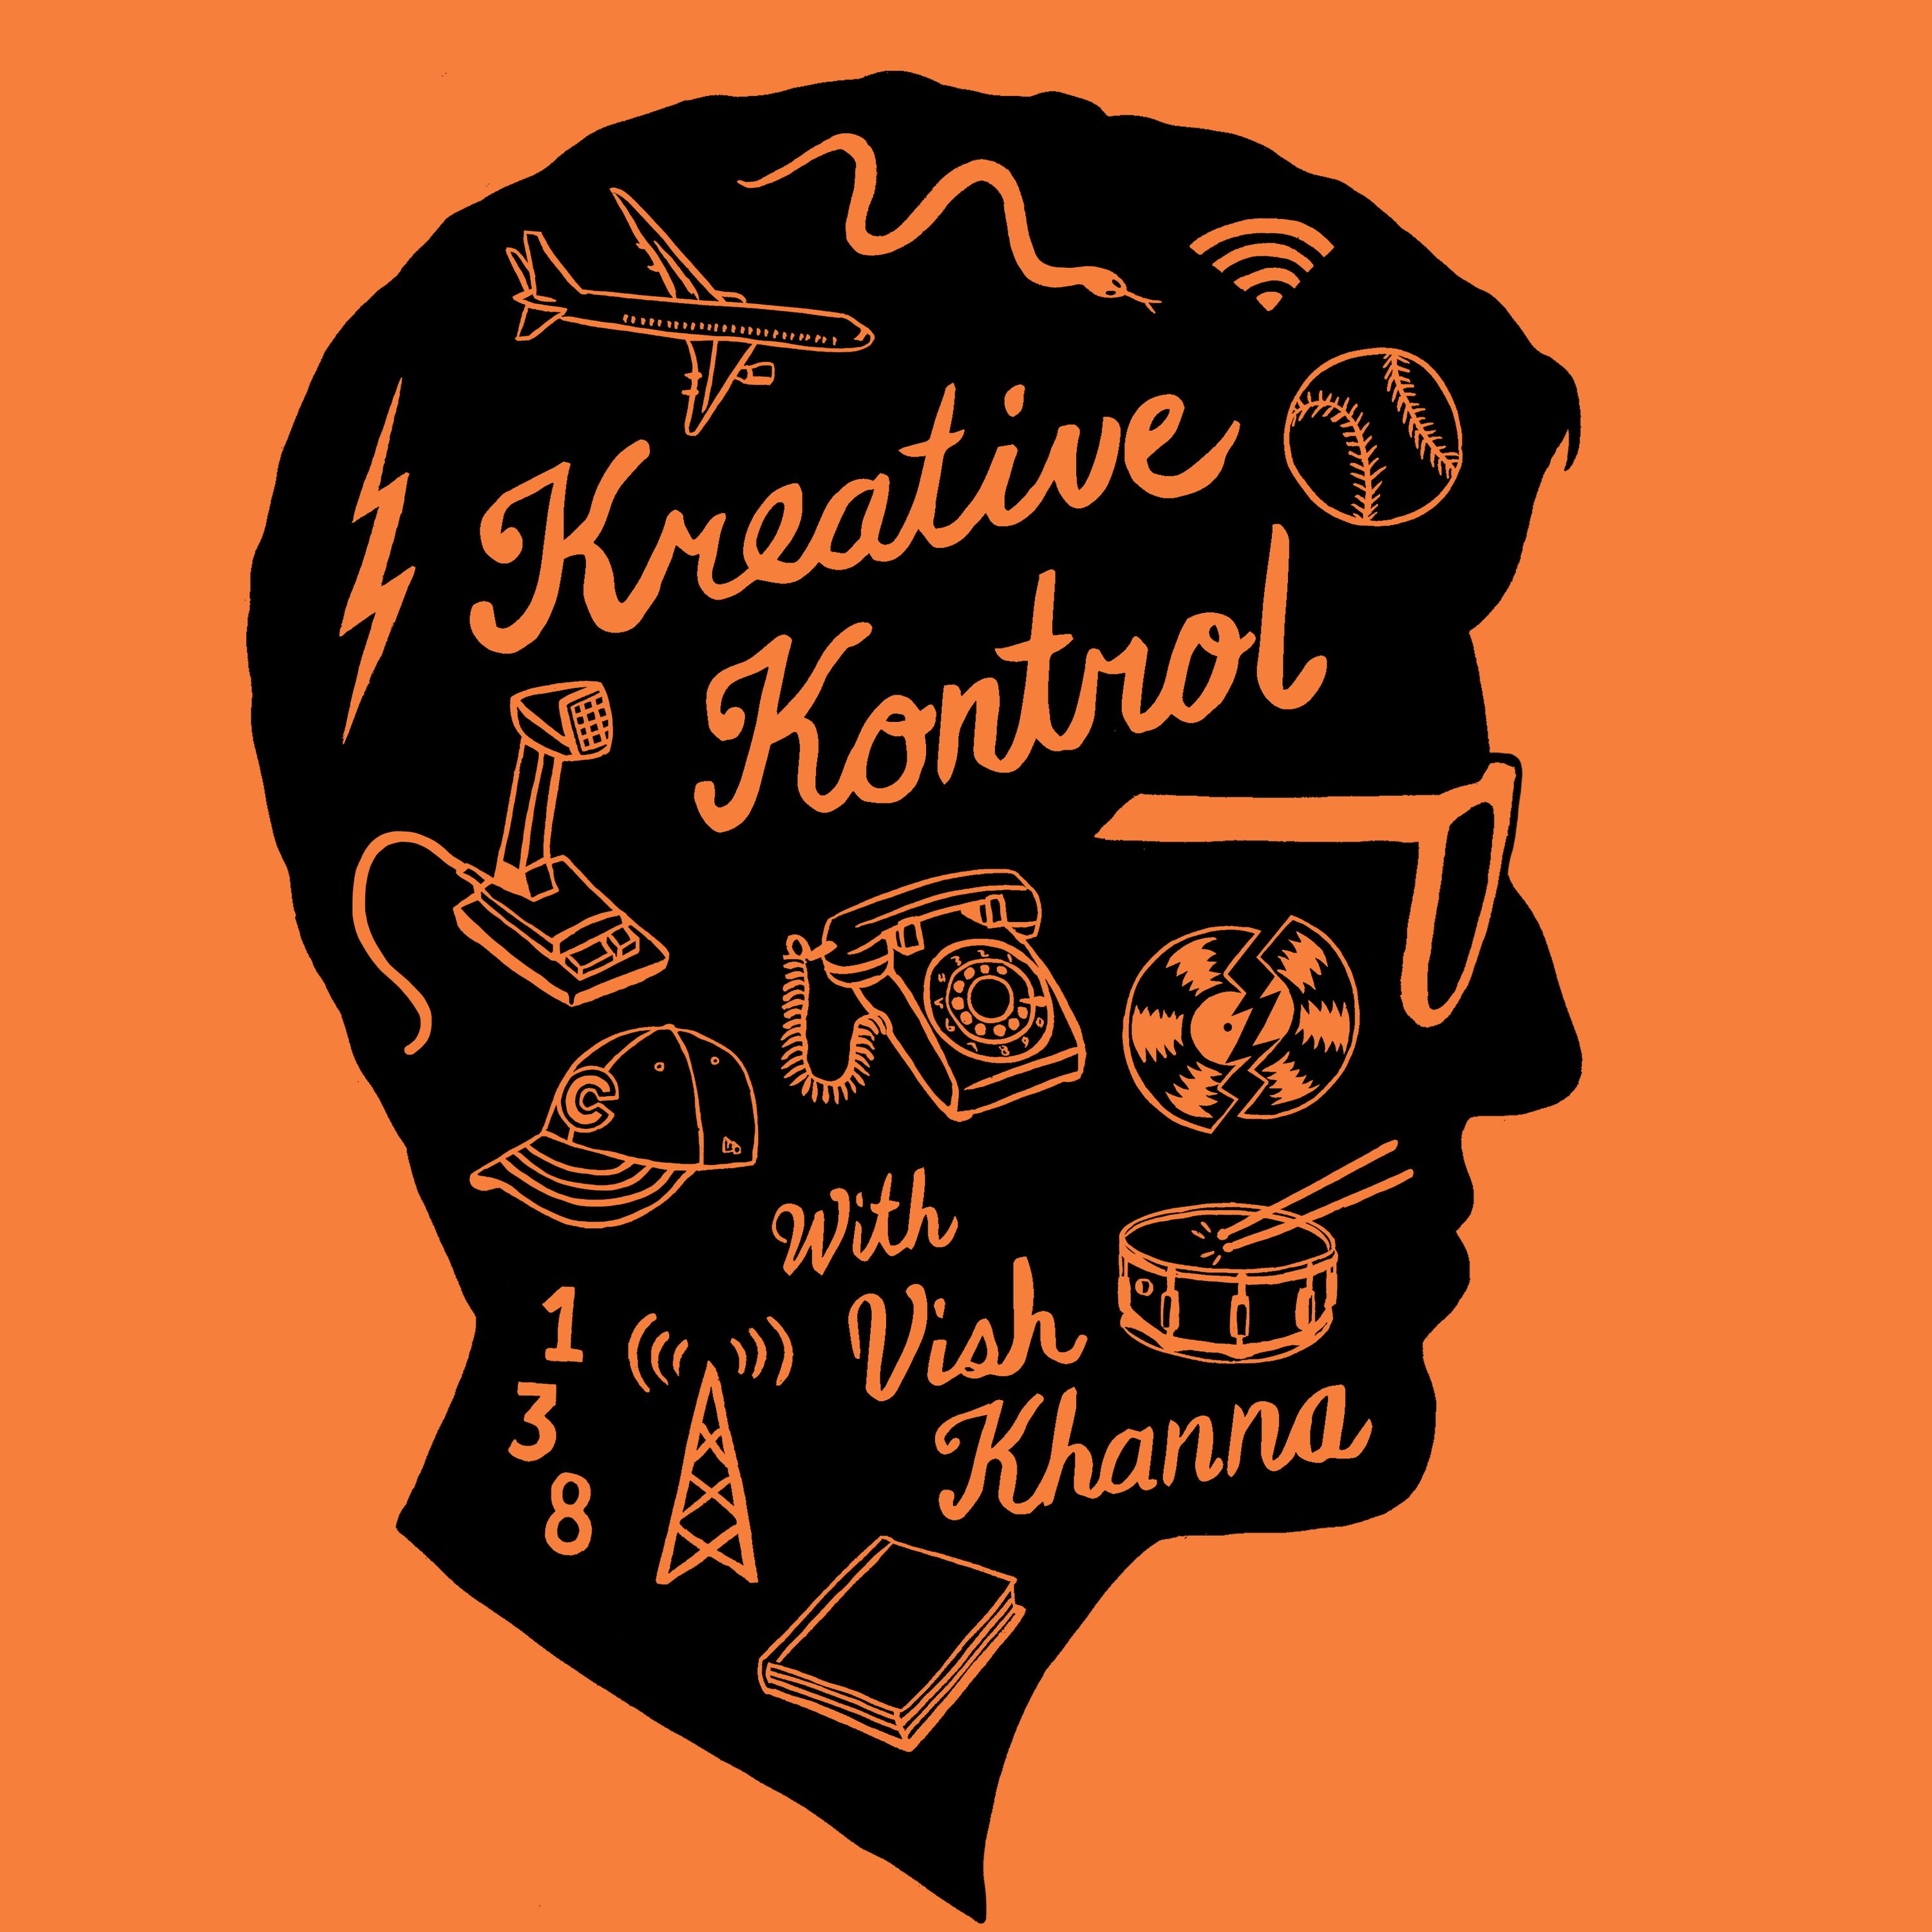 cover art for Ep. #151: Hari Kondabolu